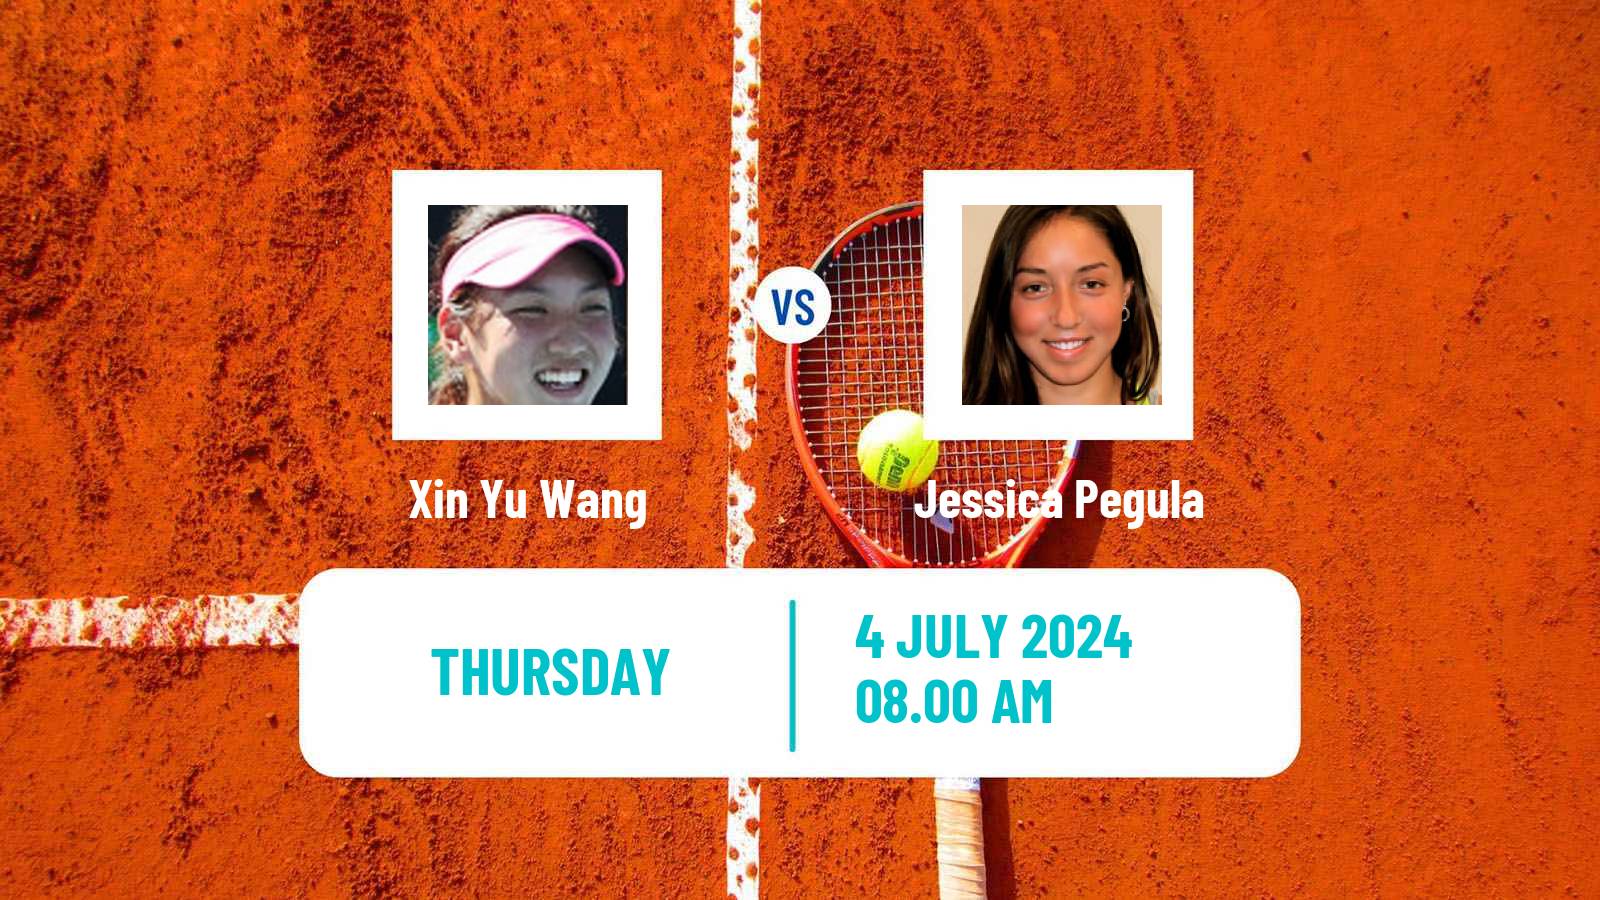 Tennis WTA Wimbledon Xin Yu Wang - Jessica Pegula